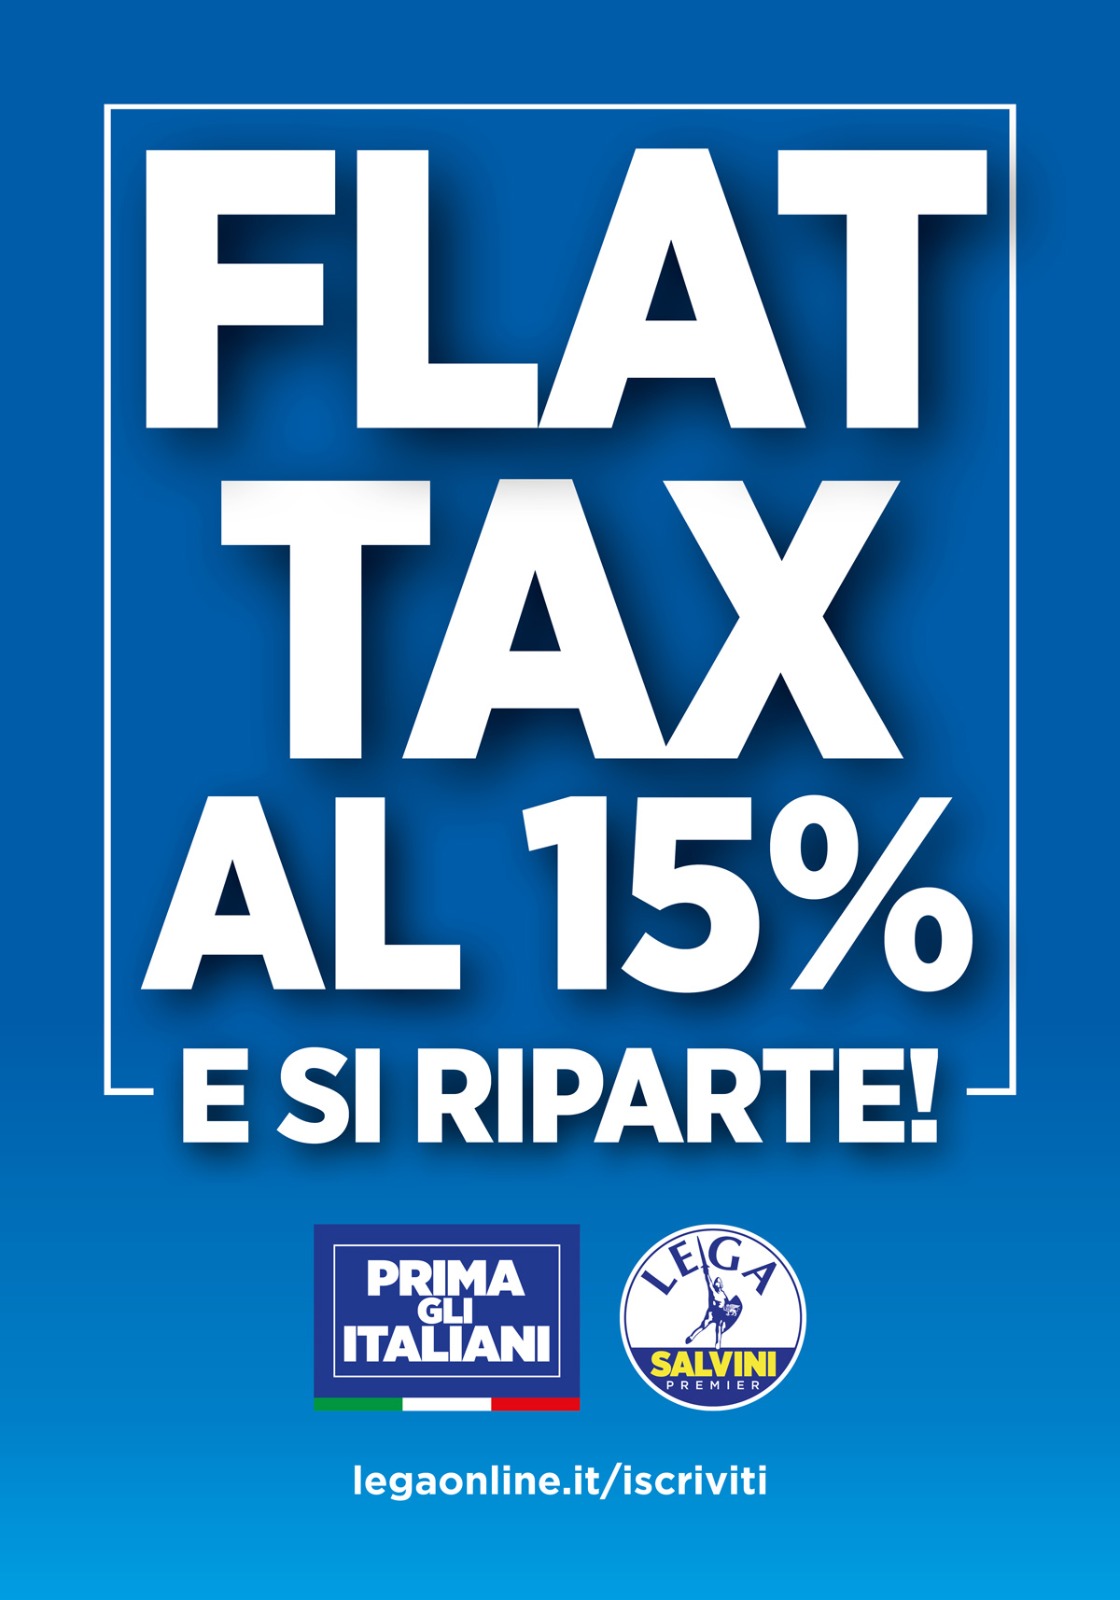 flat tax example